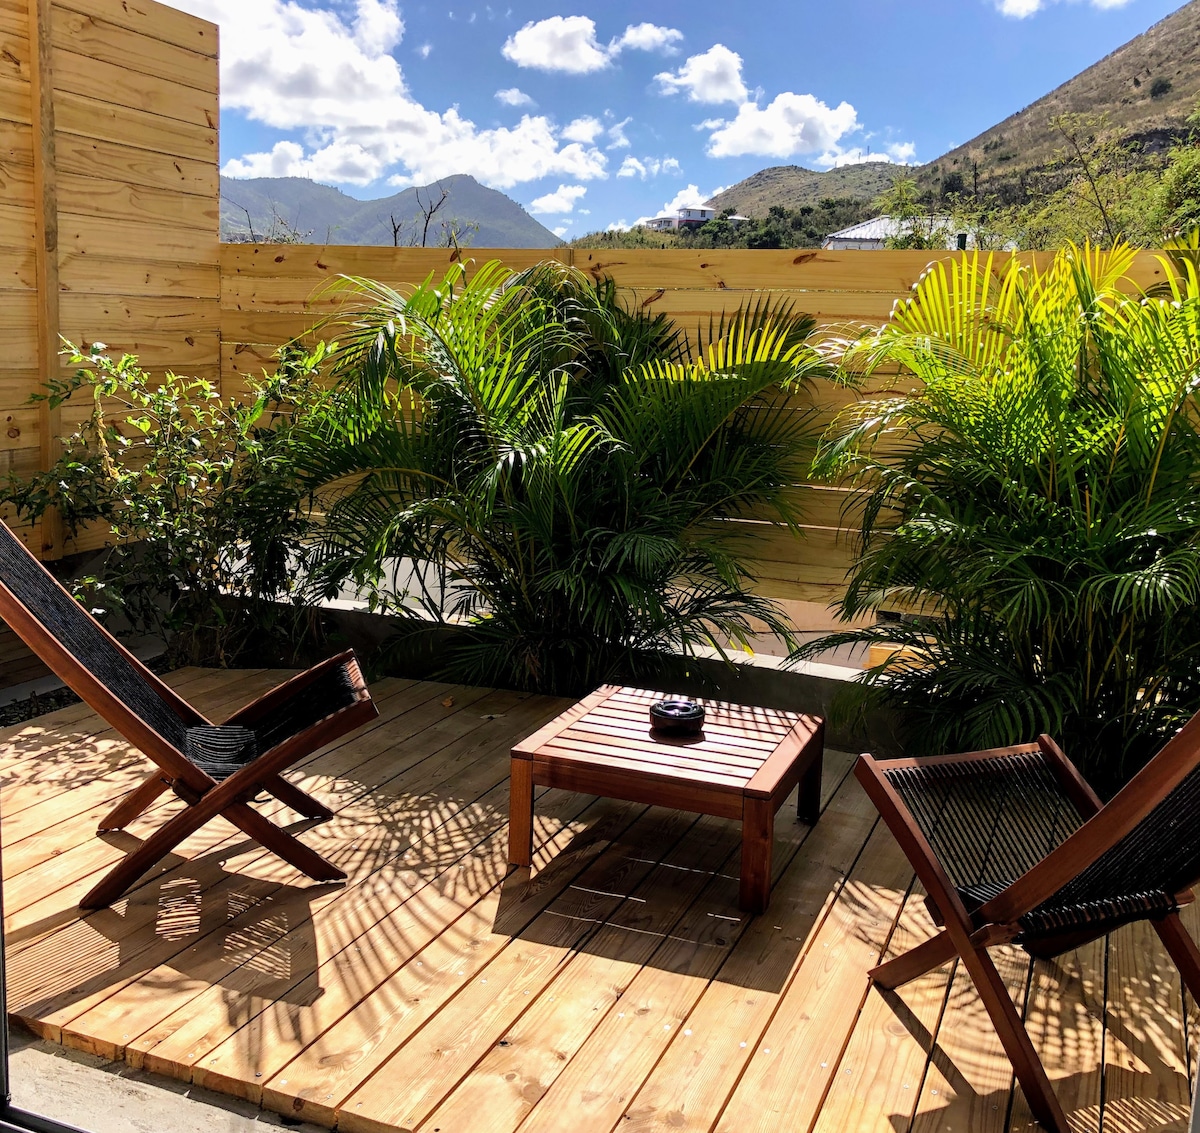 "Villa Jwi Lavi" Boutique Hotel - Terrace Garden Suite with Breakfast included